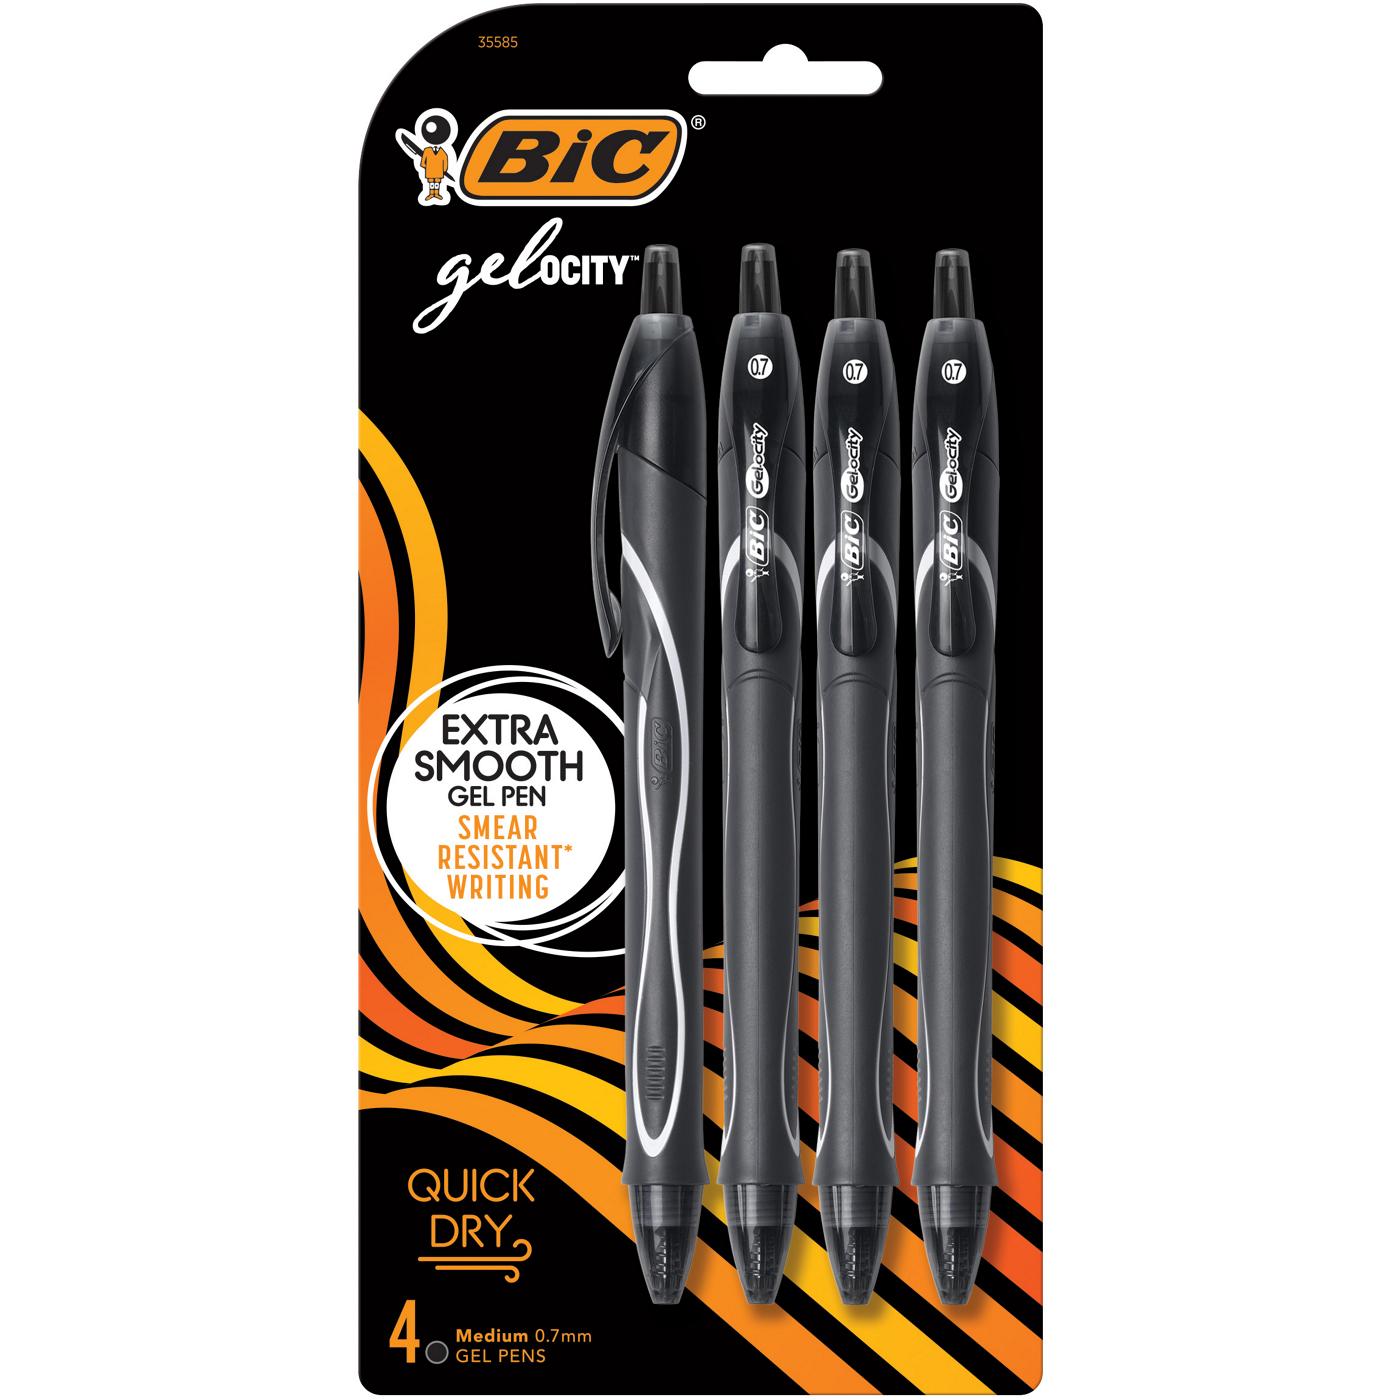 BIC Gel-ocity Quick Dry 0.7mm Gel Pens - Black Ink; image 1 of 2